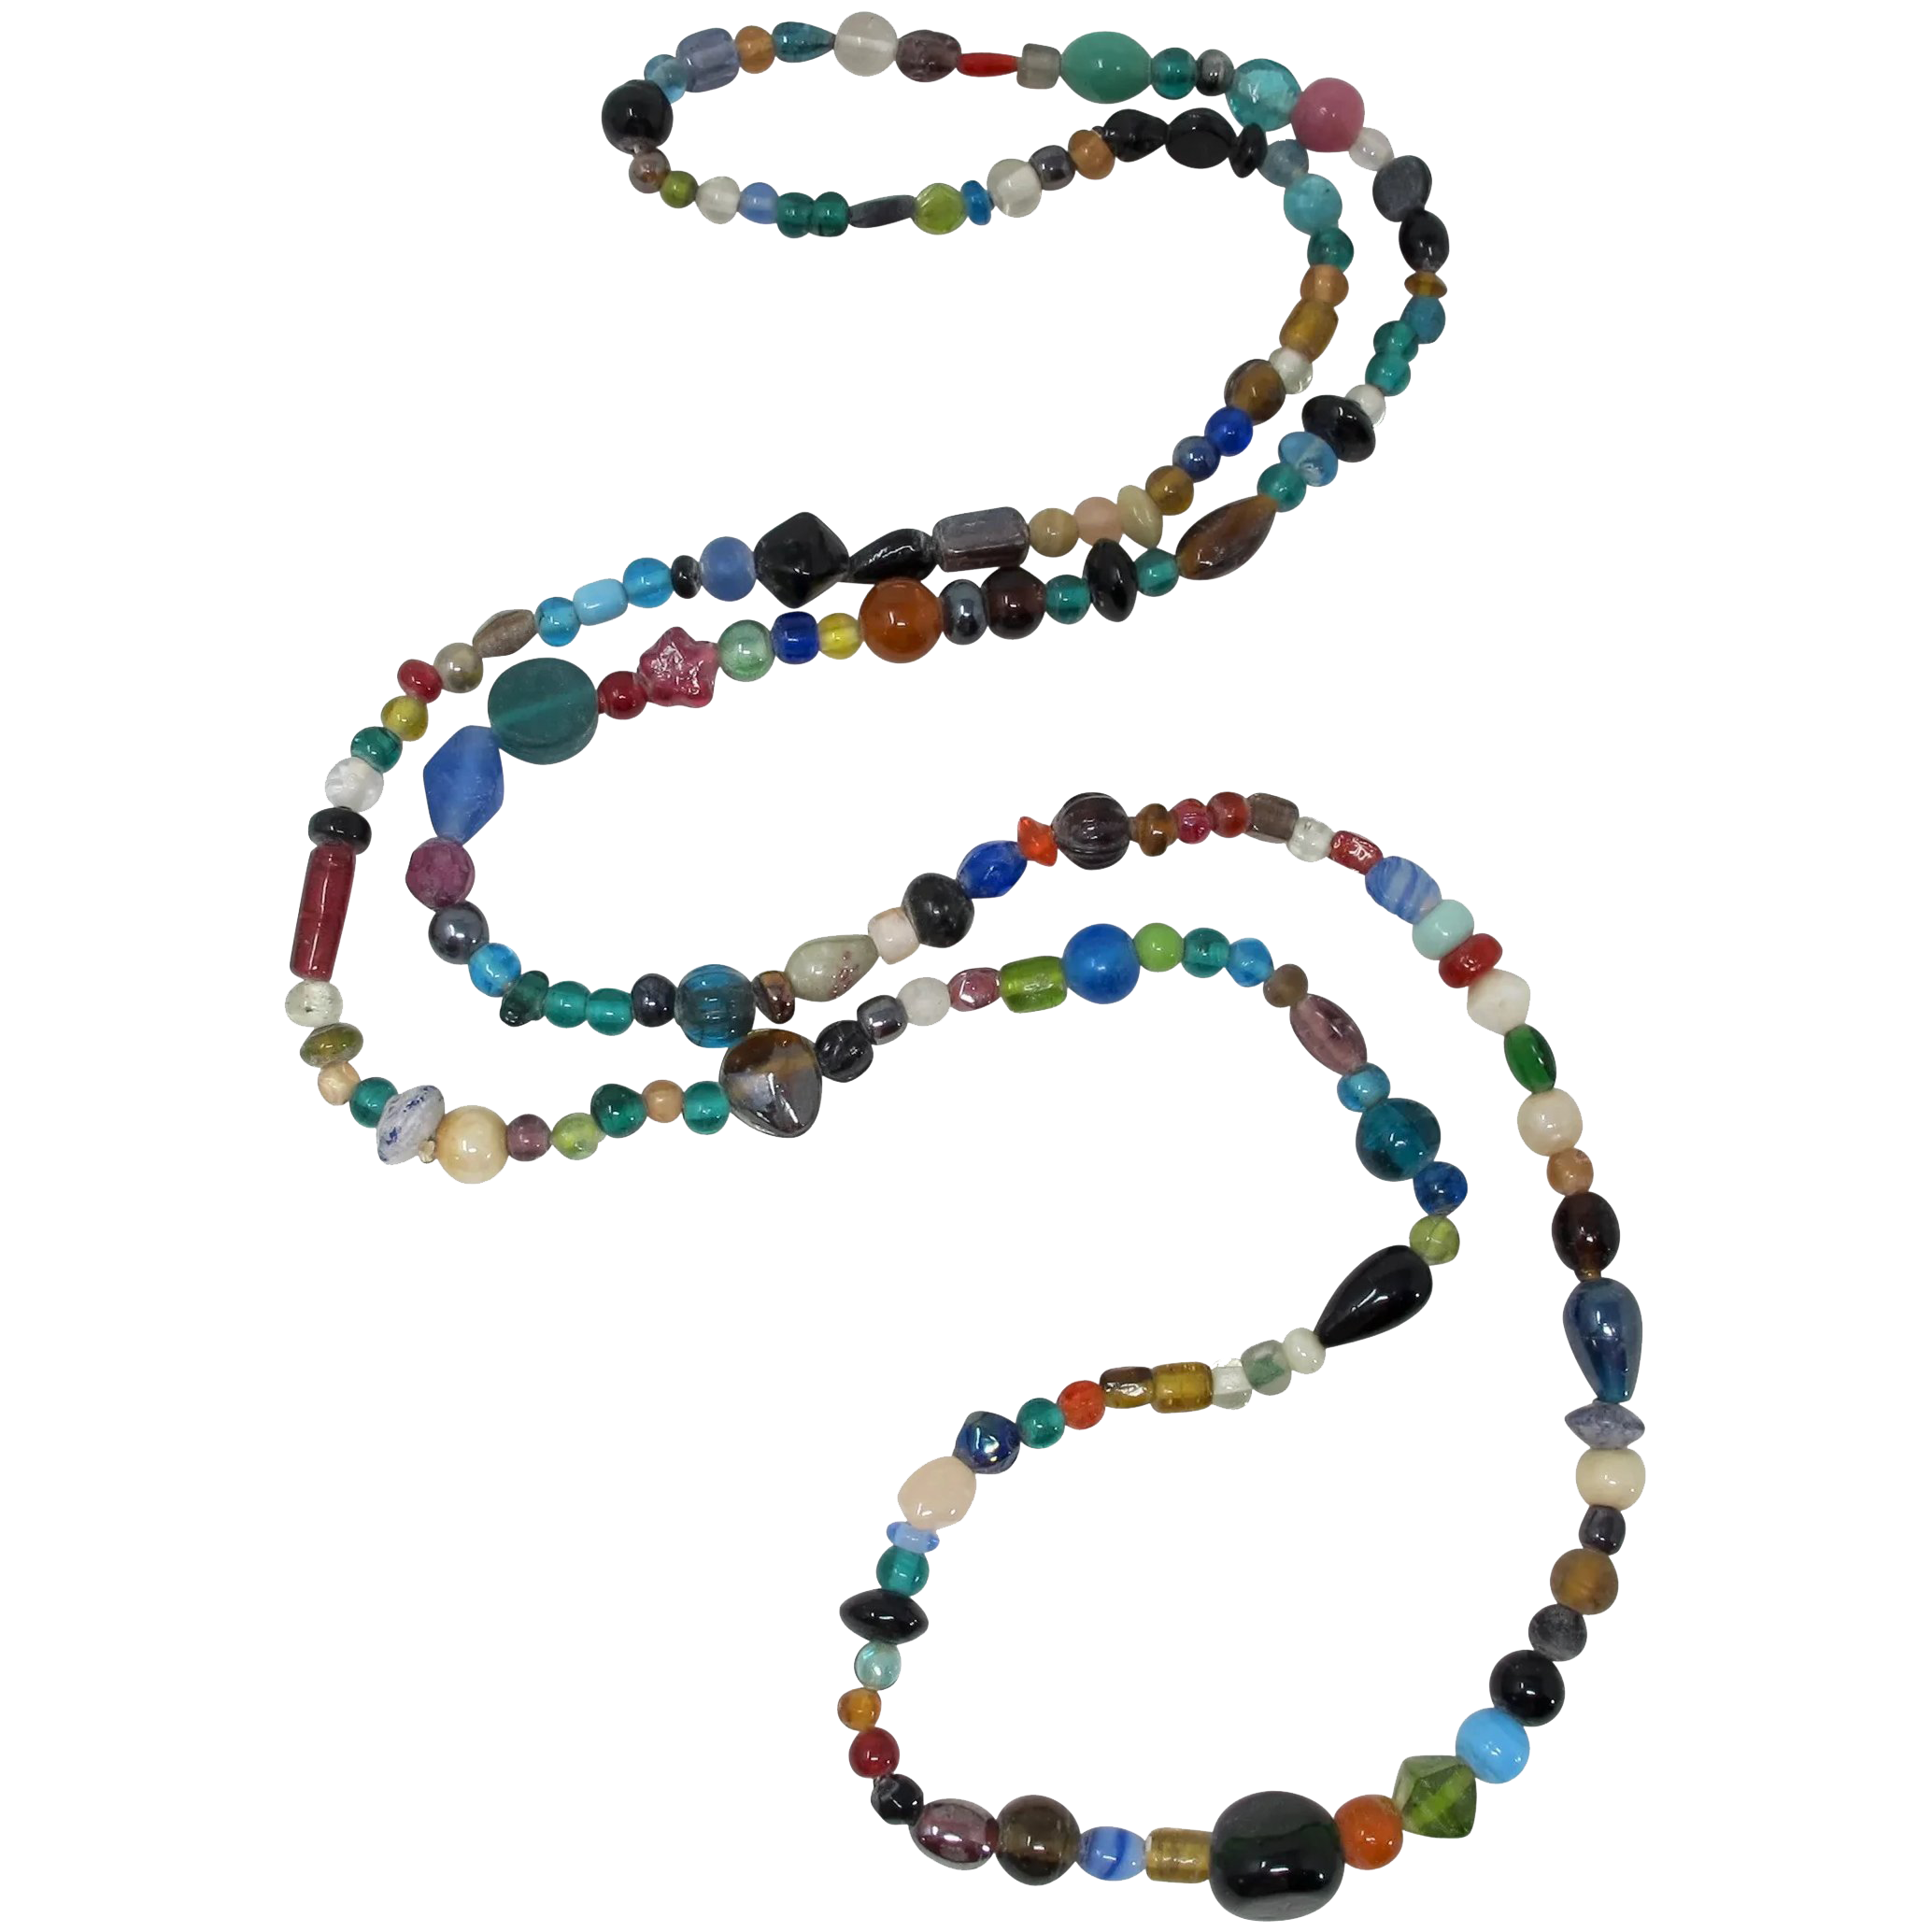 Mardi Gras Beads Transparent Images